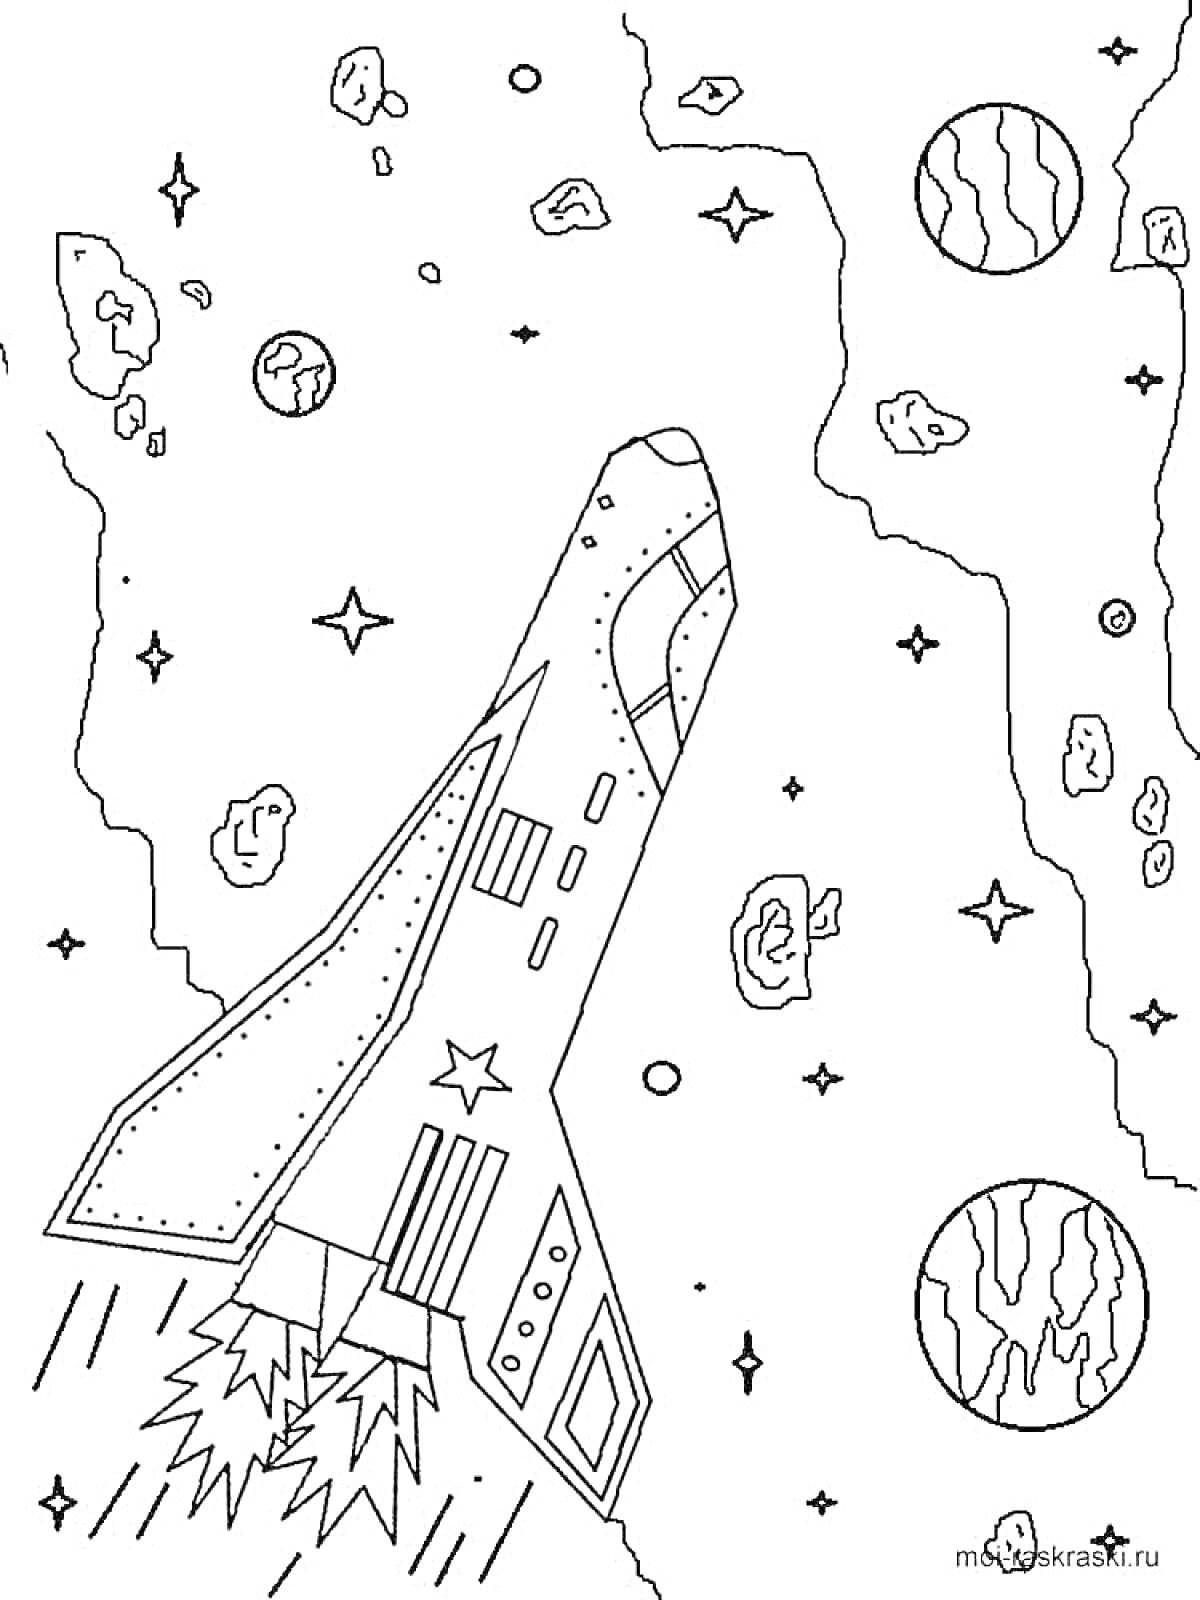 Раскраска Космический шаттл в полете среди астероидов, планет и звезд